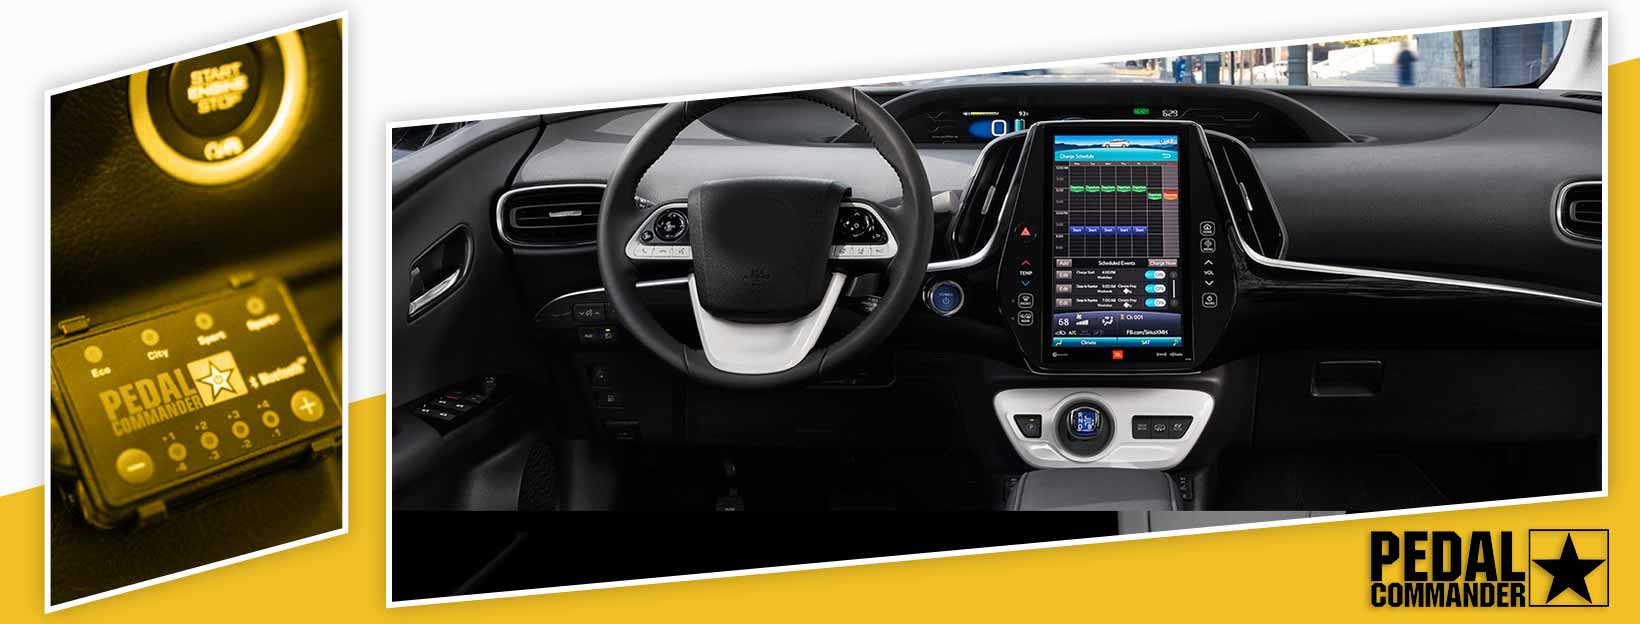 Pedal Commander for Toyota Prius - interior